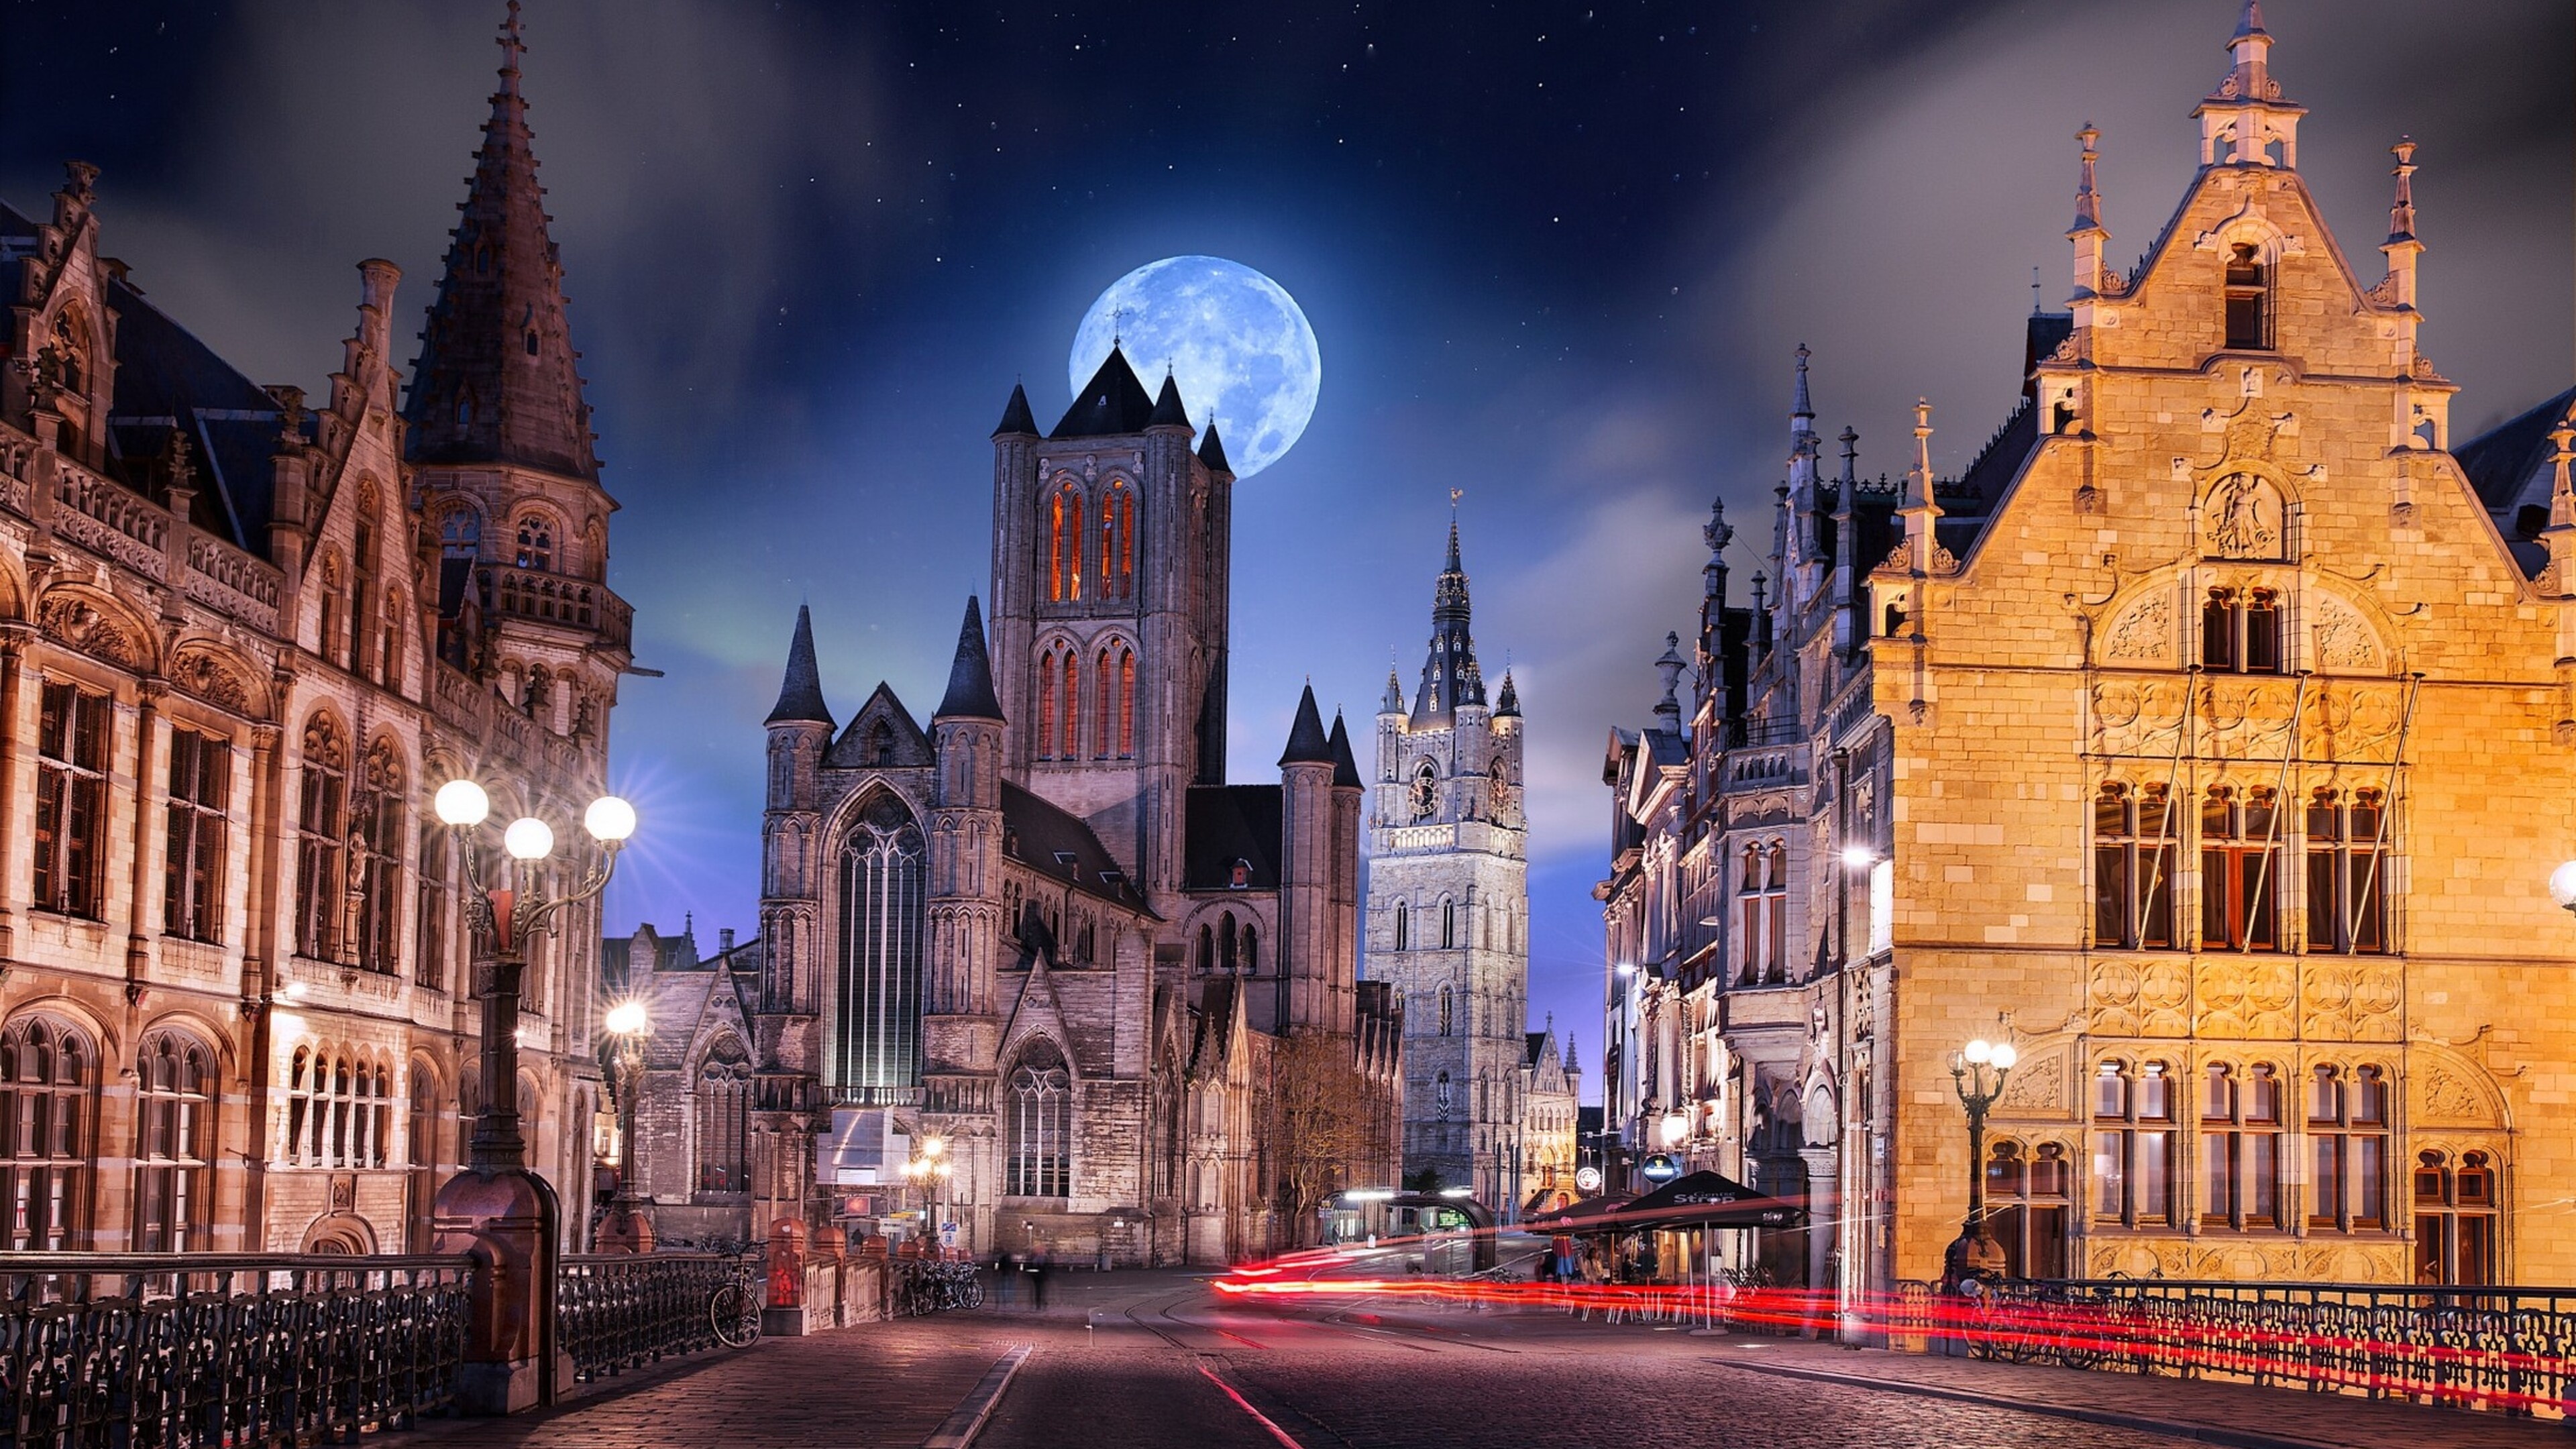 Gothic Architecture: Saint Nicholas Church, Korenmarkt, Ghent, Belgium, Towers, Pointed arches, Full moon. 3840x2160 4K Wallpaper.